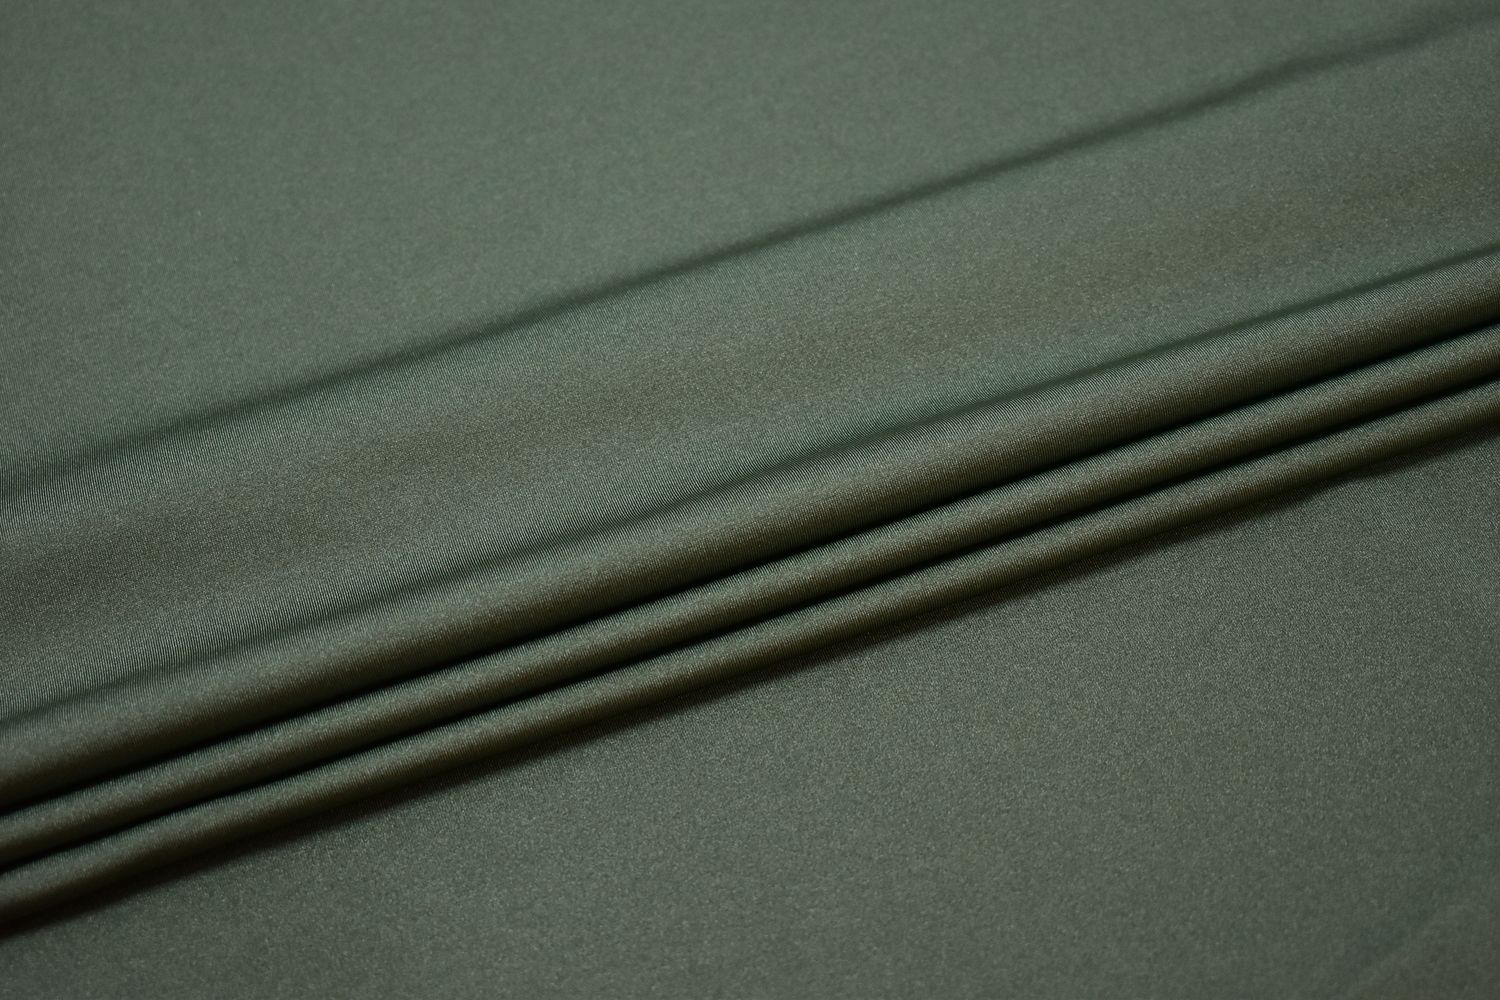 Бифлекс матовый серого цвета W-125033